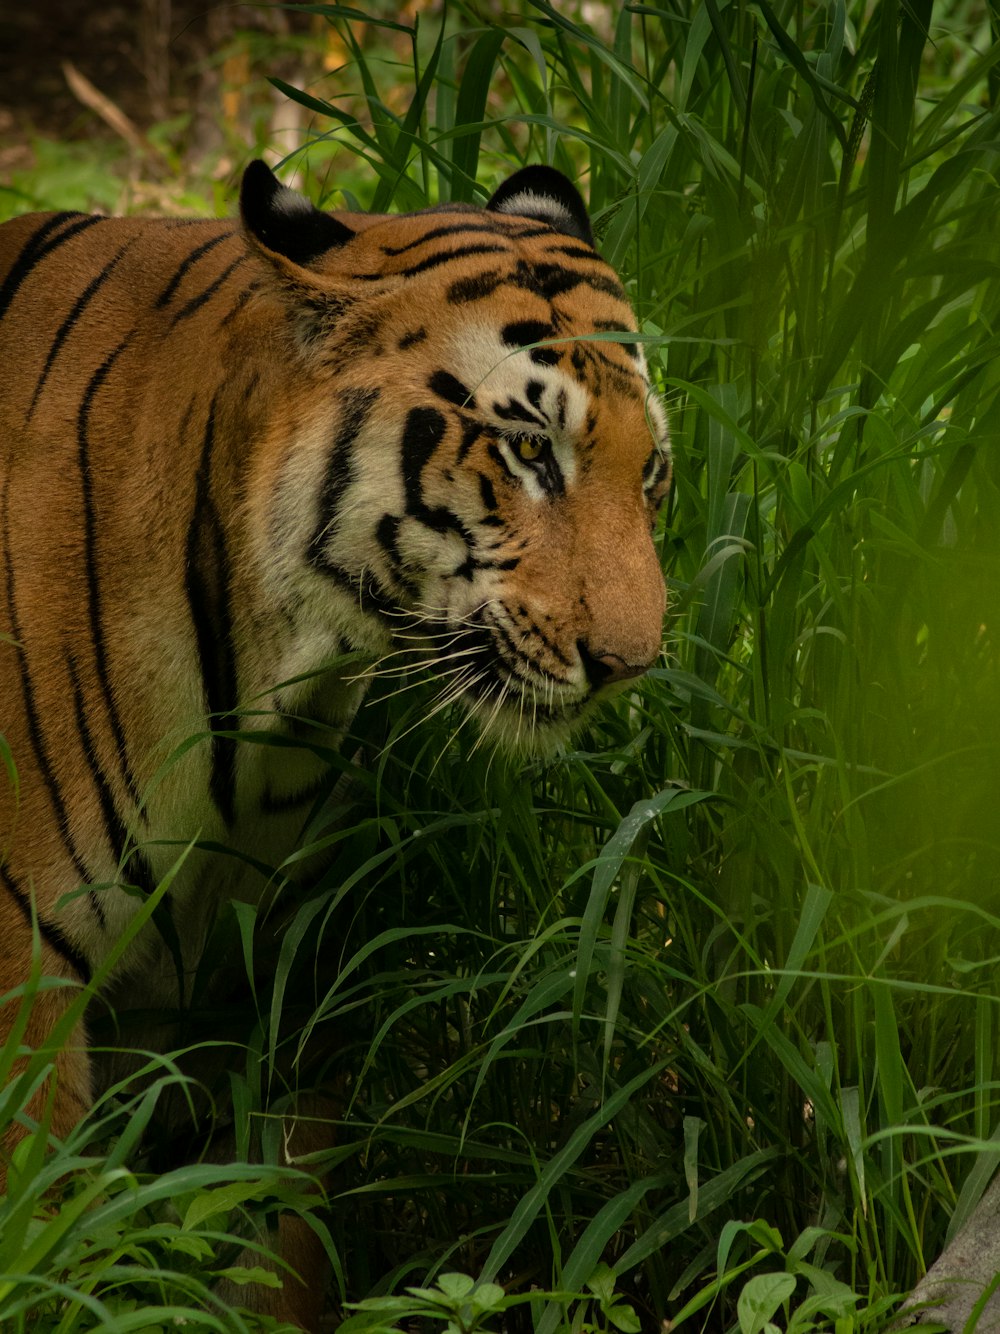 a tiger walking through a lush green forest